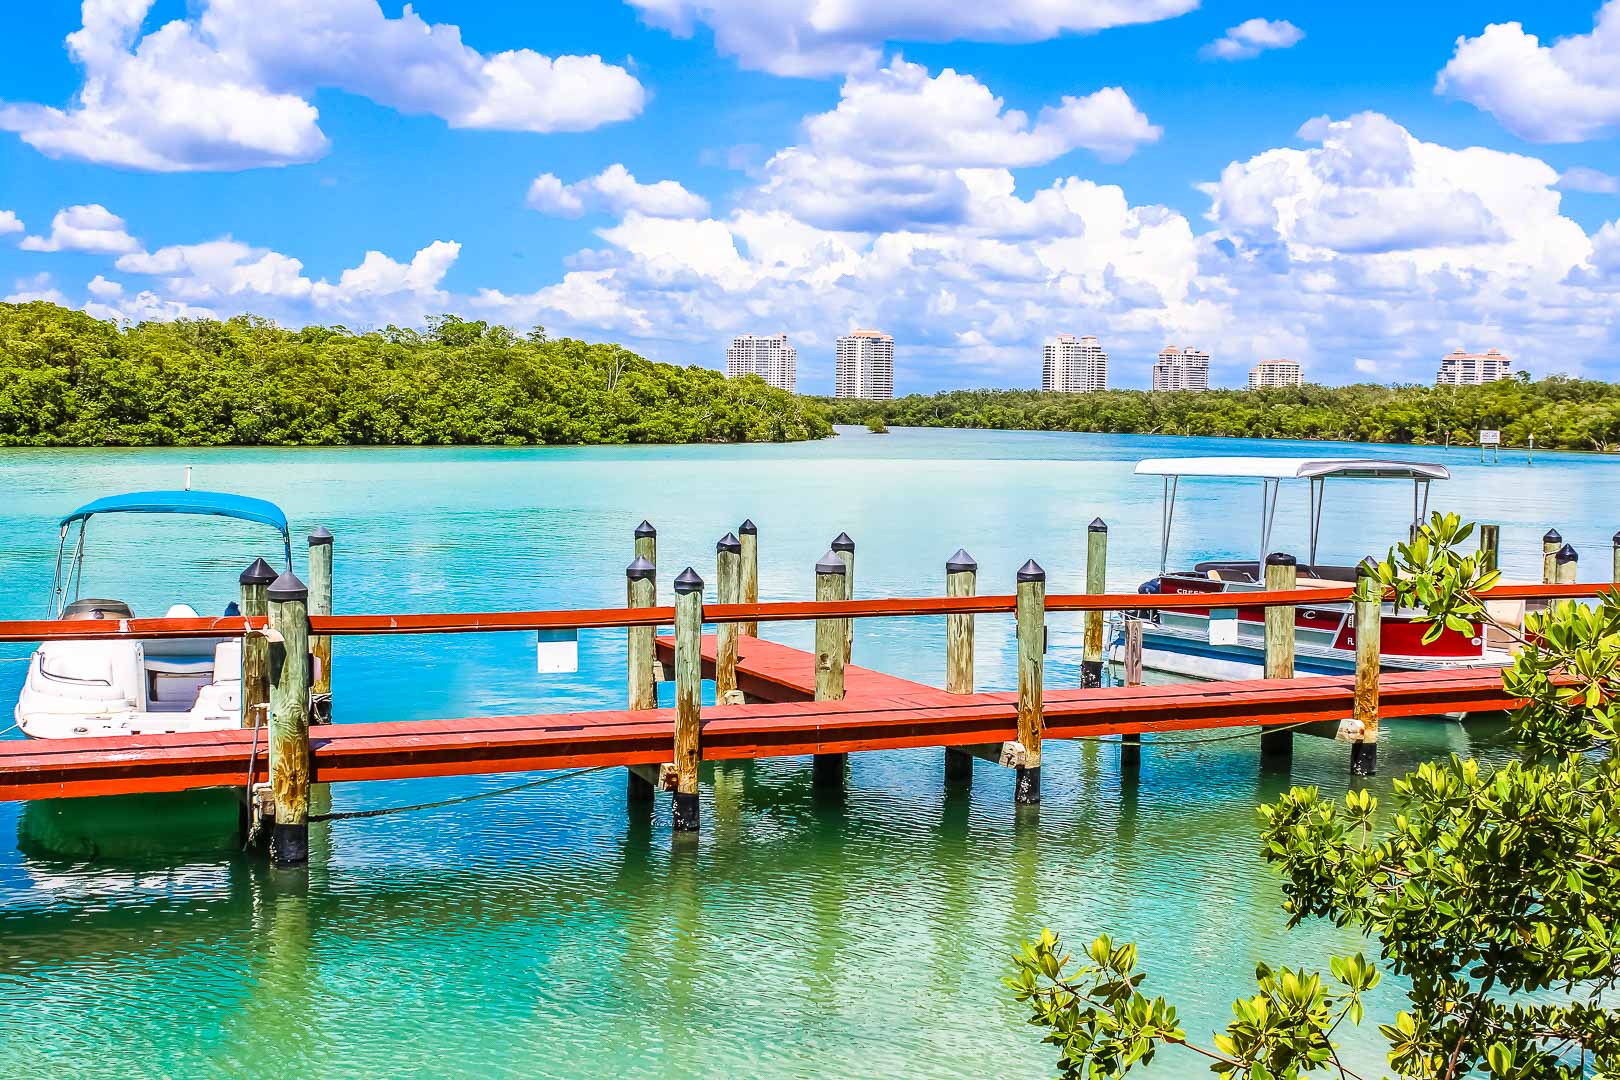 A Boat Dock from VRI's Bonita Resort and Club in Florida.